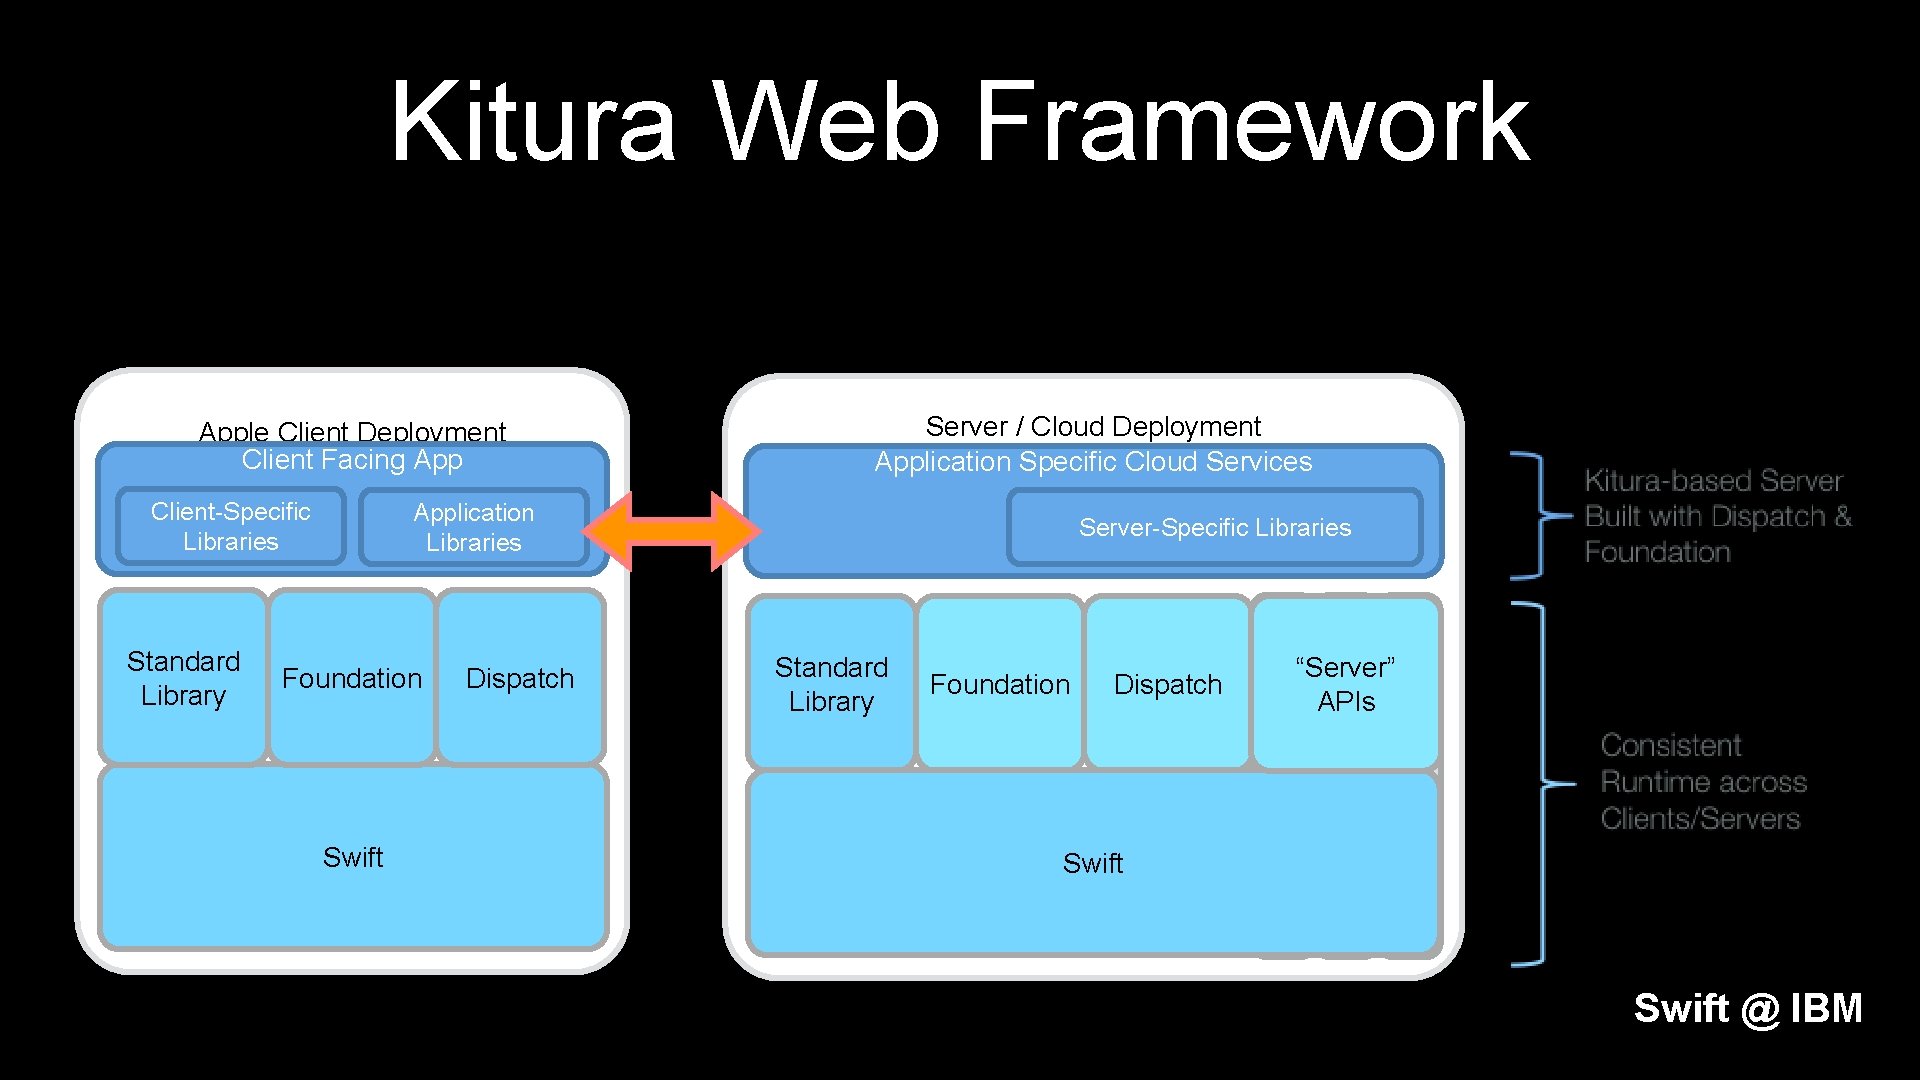 Kitura Web Framework Foundation Swift Dispatch Server-Specific Libraries Standard Library Foundation Dispatch “Server” APIs